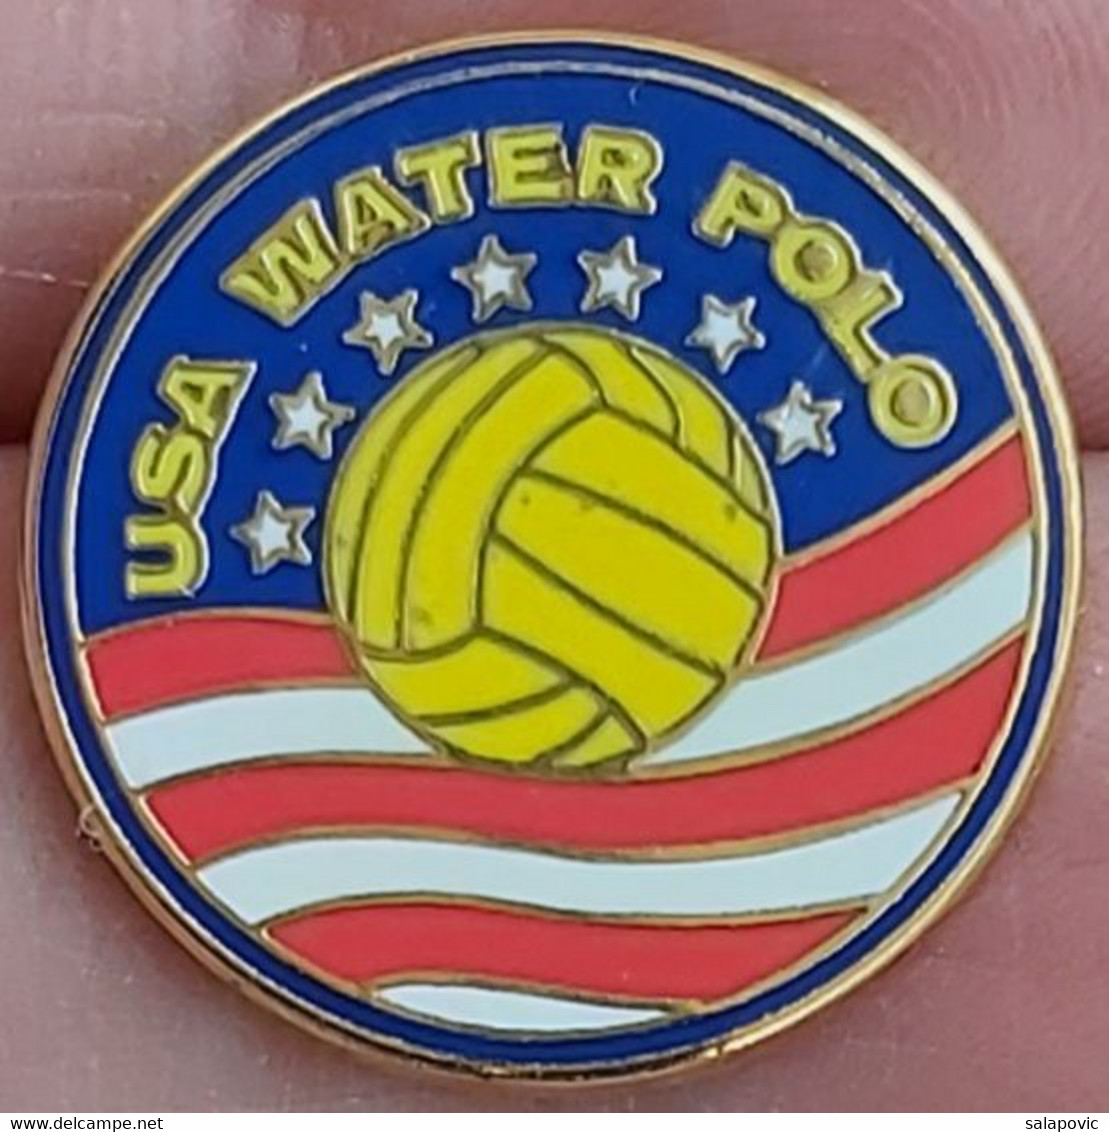 USA WATER POLO Federation Union Association PIN A7/7 - Water-Polo